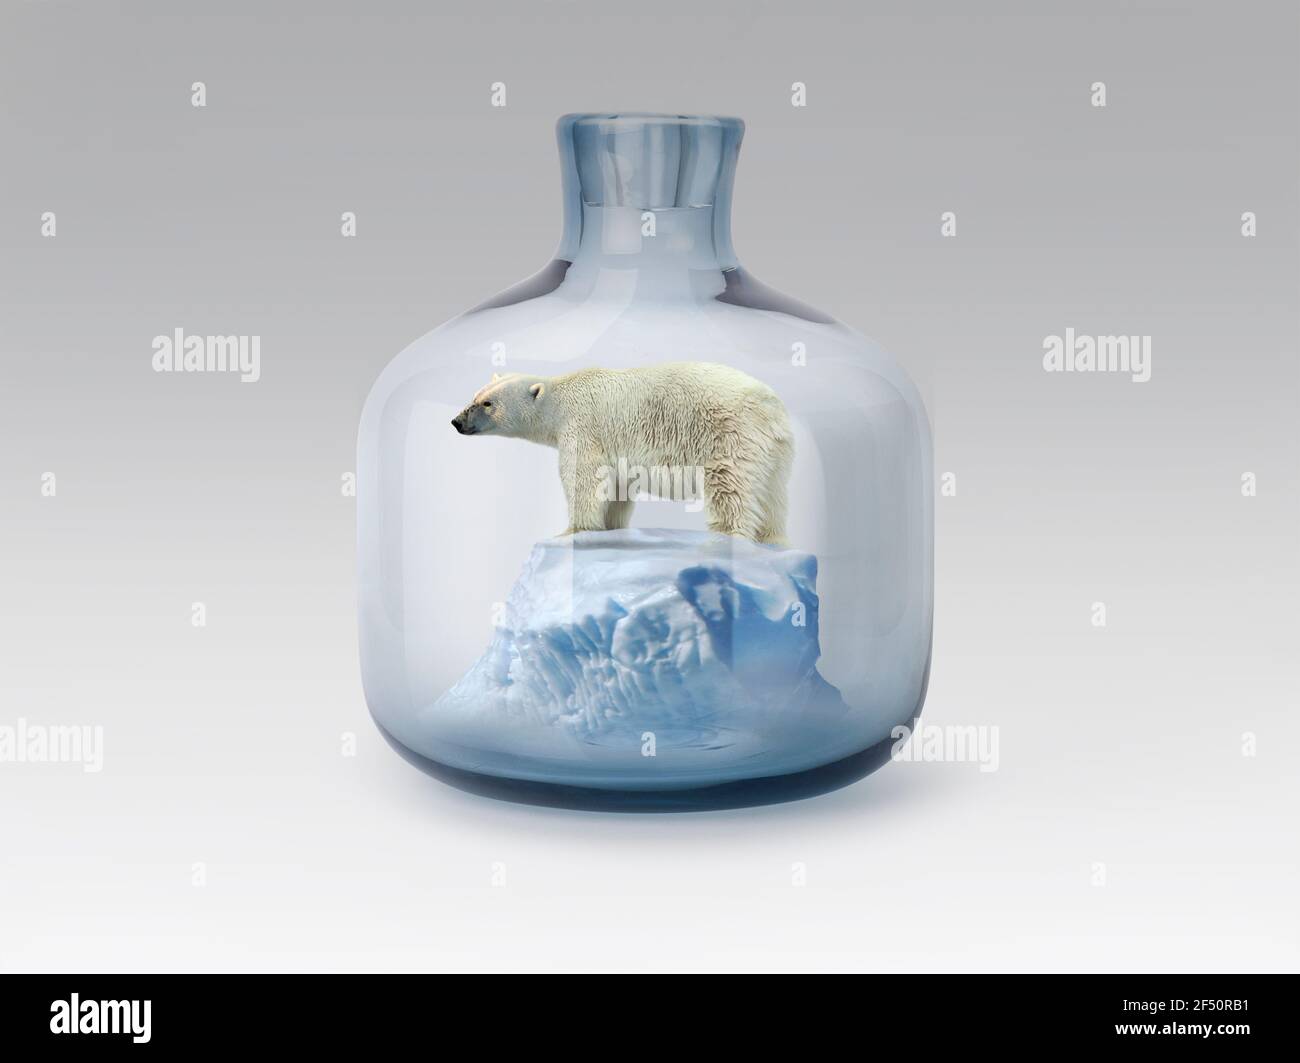 Polar bear in jar with melting ice Stock Photo